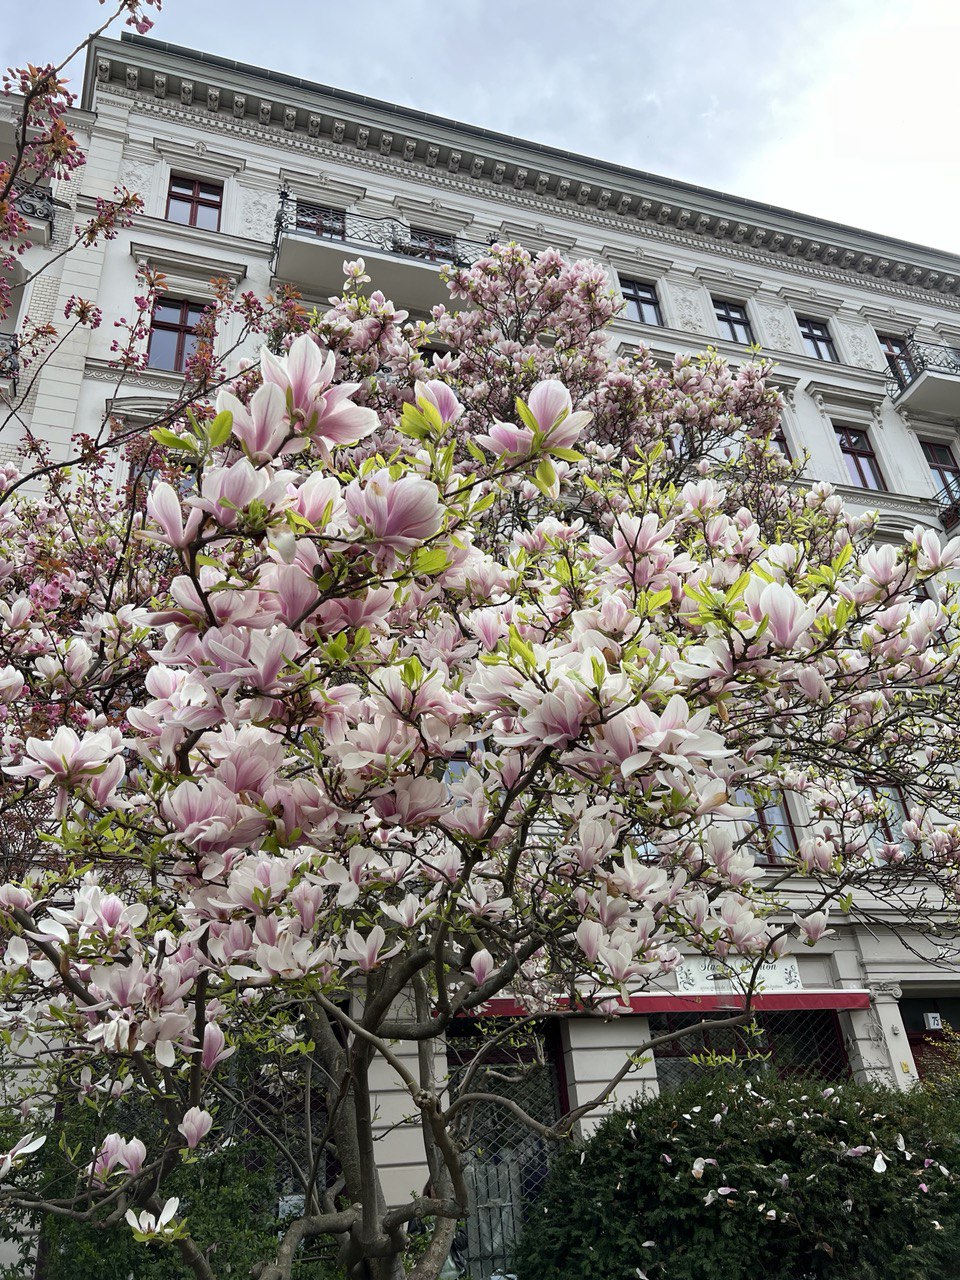 Exploring Berlin's Blossoming Beauty